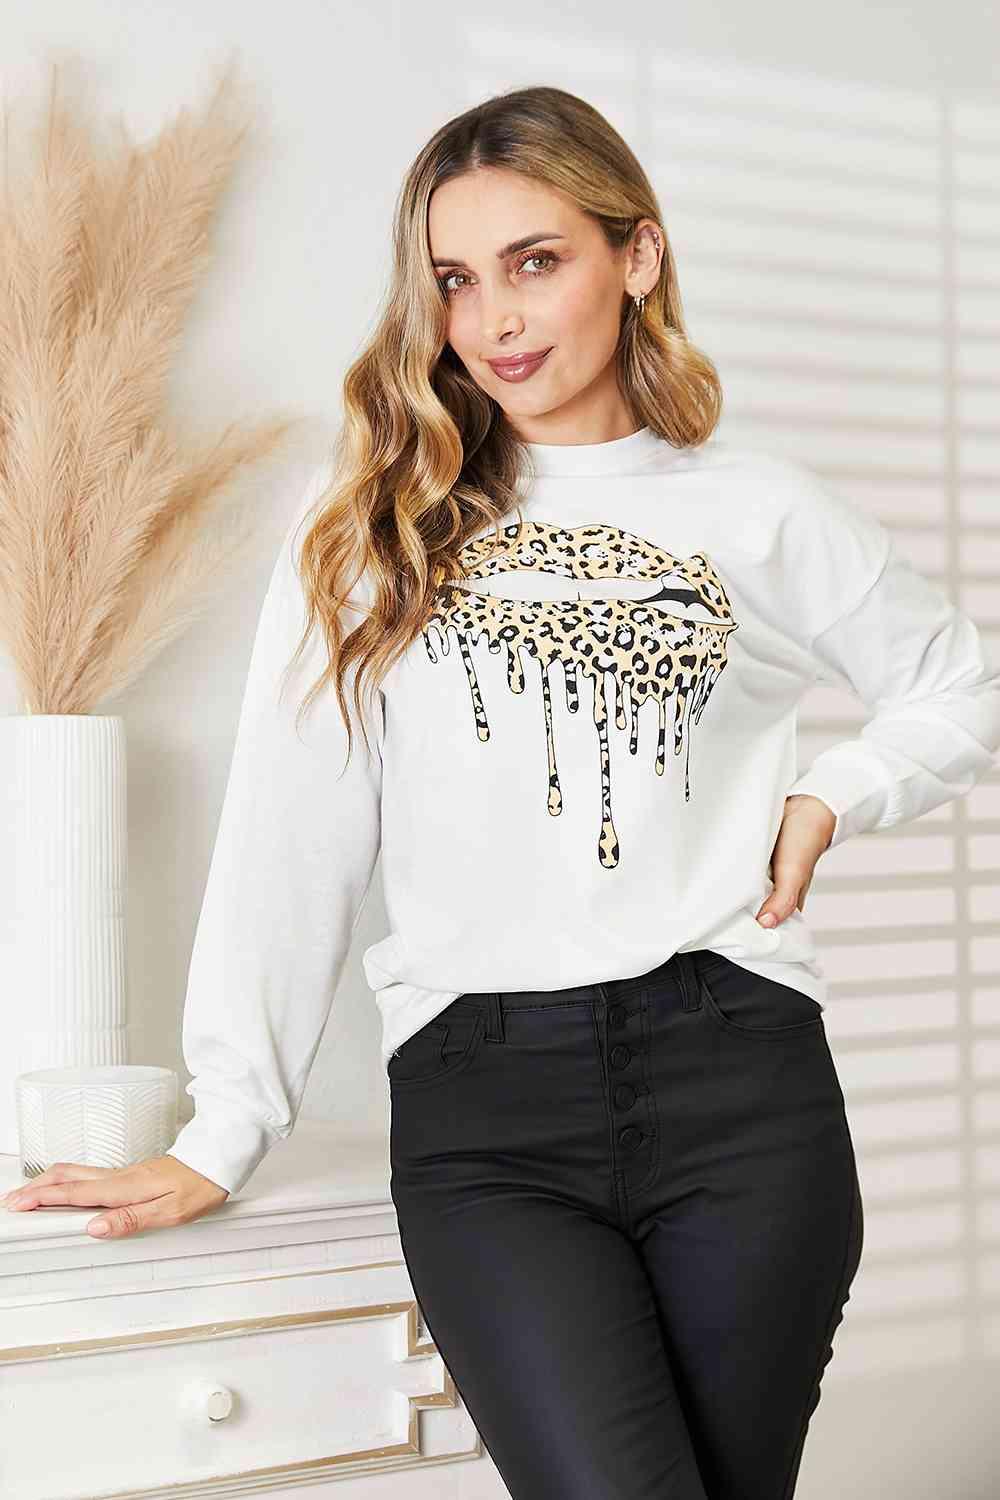 Women's Sweatshirts & Hoodies Simply Love Graphic Dropped Shoulder Round Neck Sweatshirt